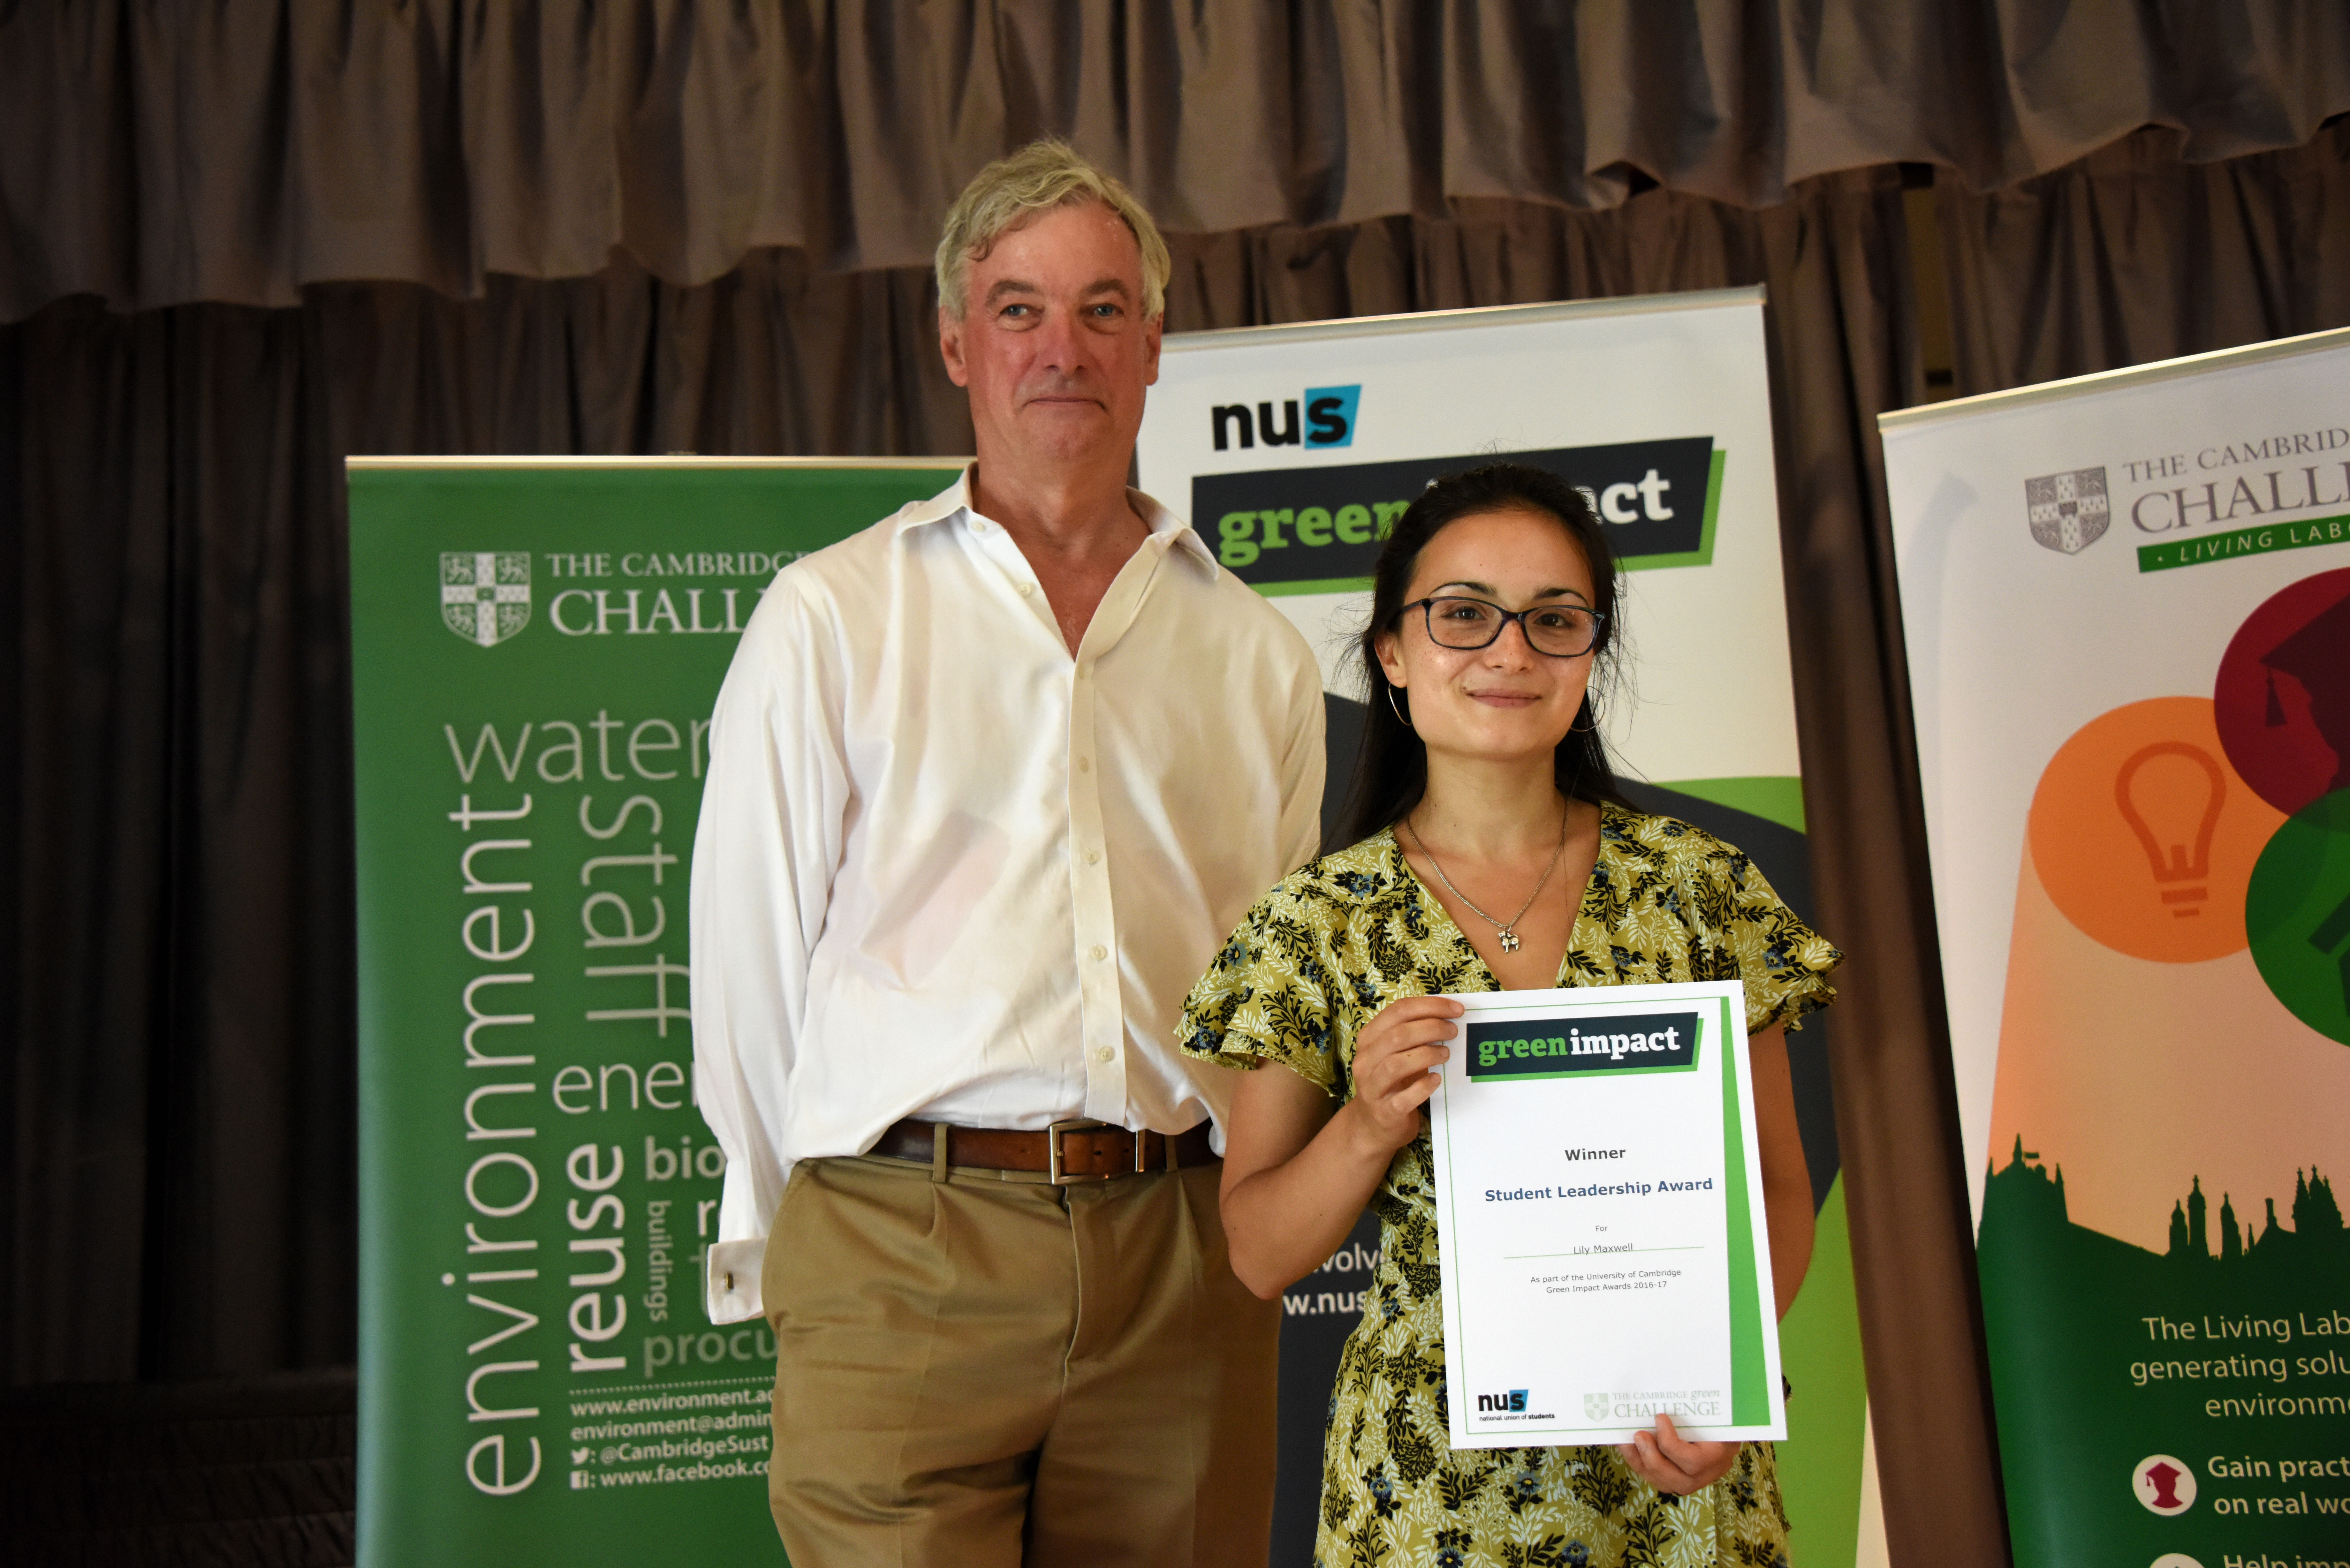 Lily, Student leadership Award winner